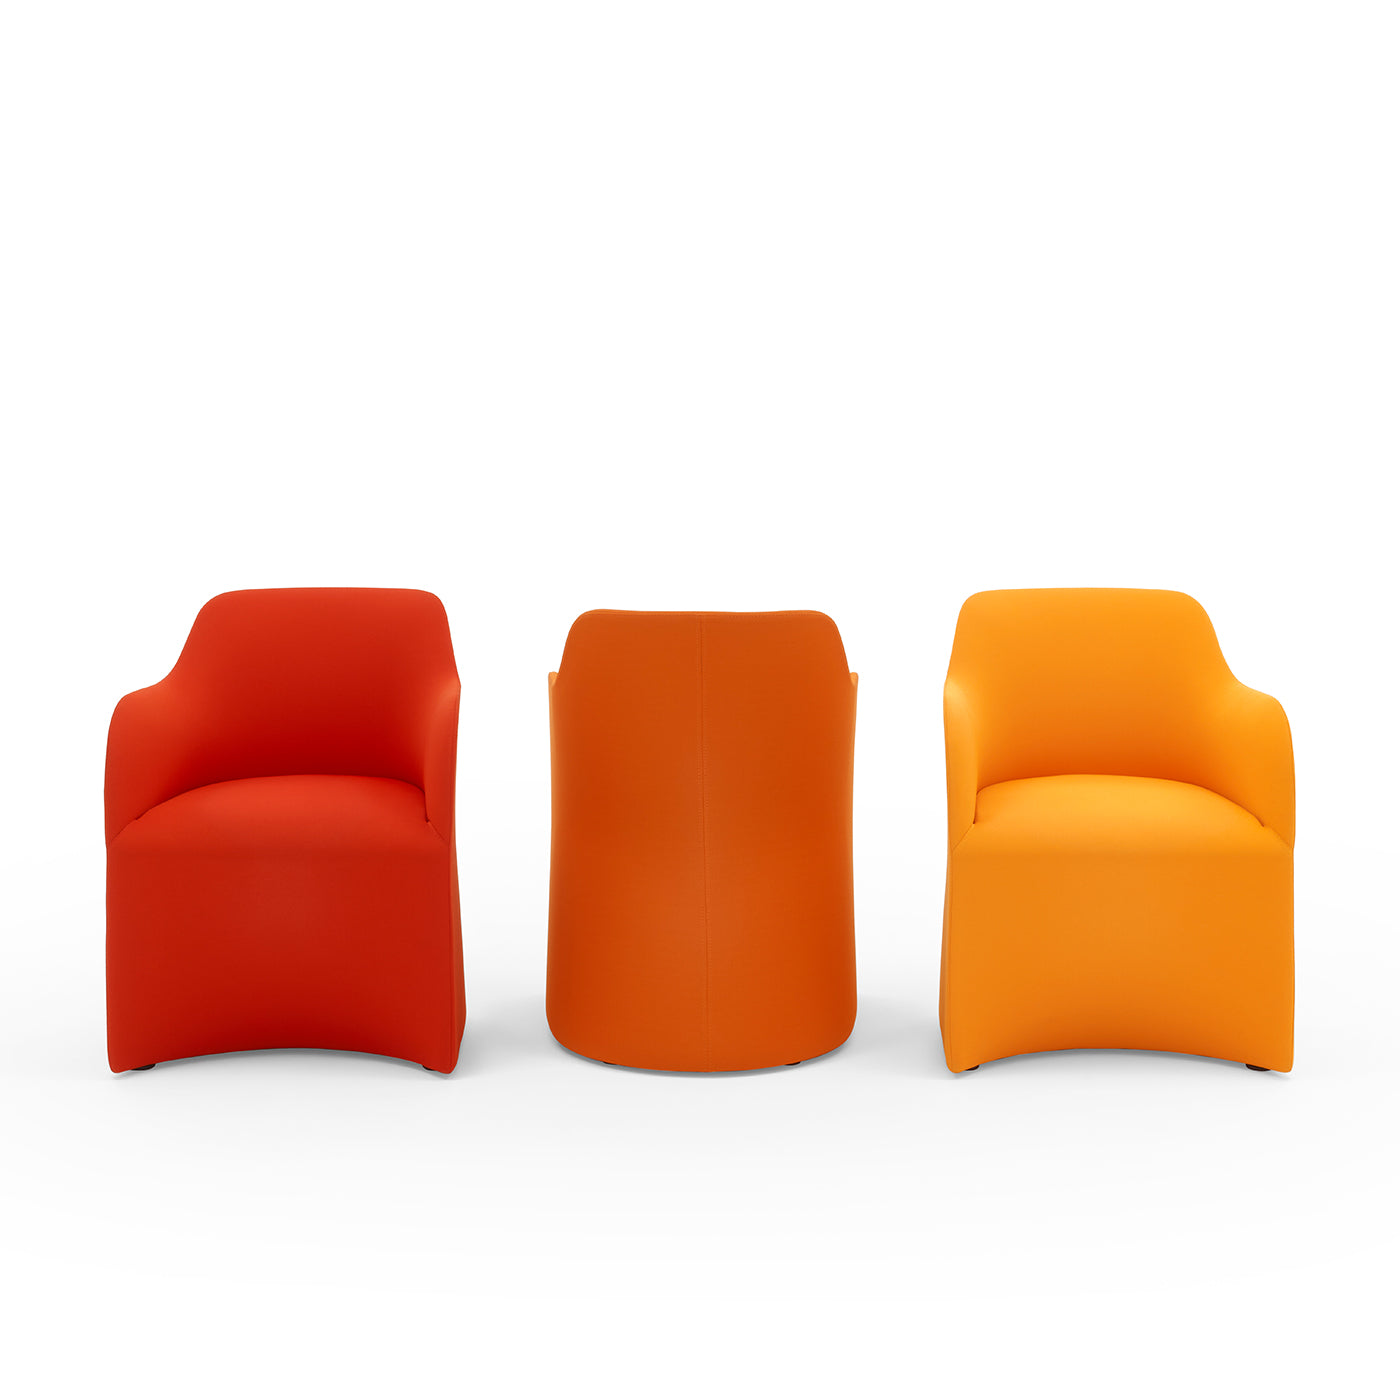 Maggy Big Orange Armchair by Basaglia + Rota Nodari - Alternative view 2